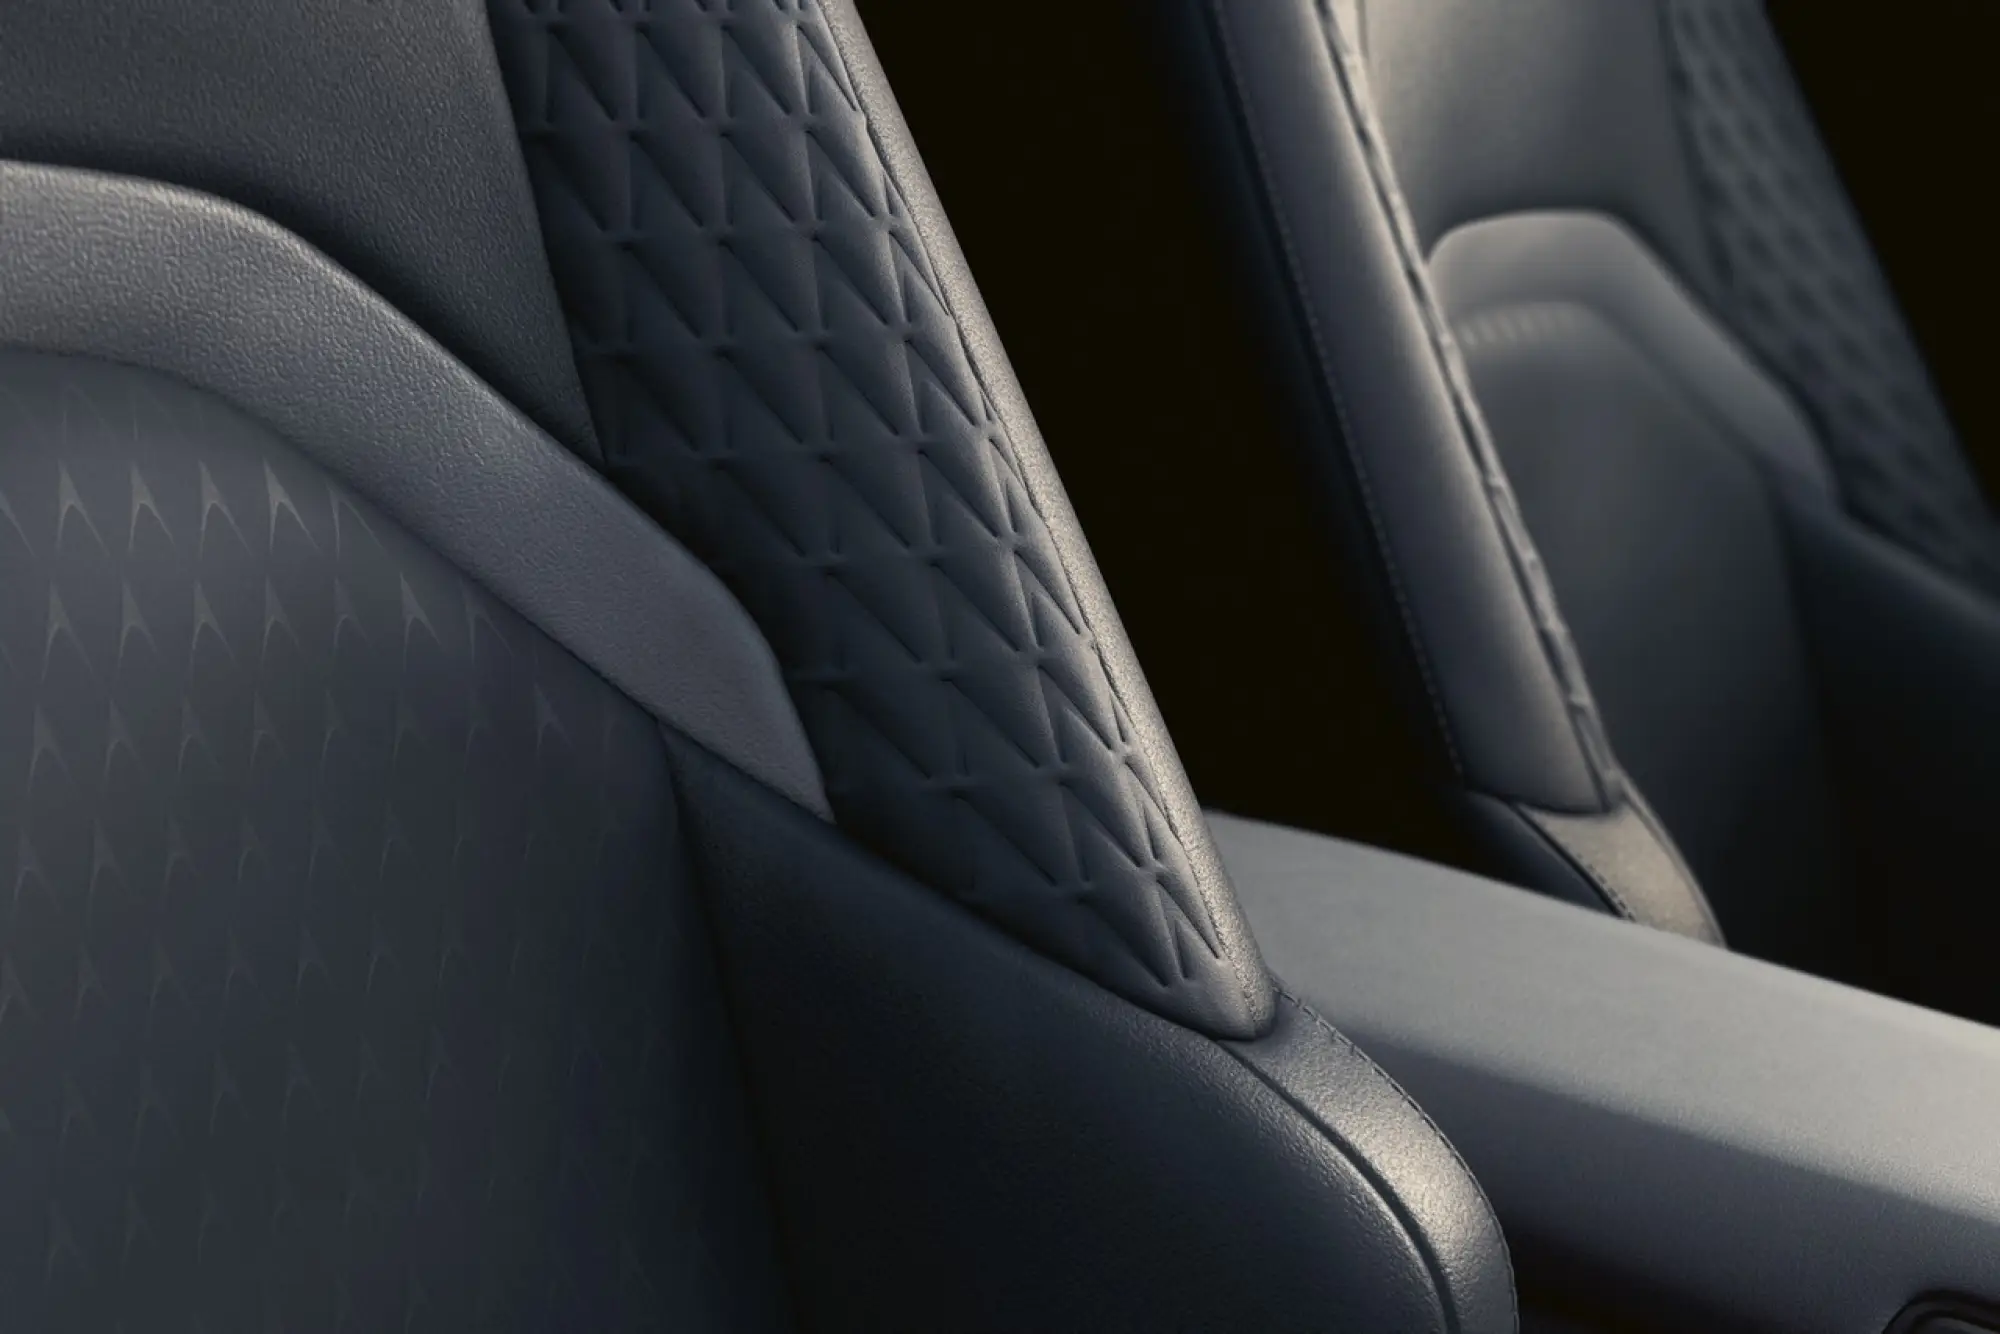 Lexus UX 2021 foto ufficiali - 7